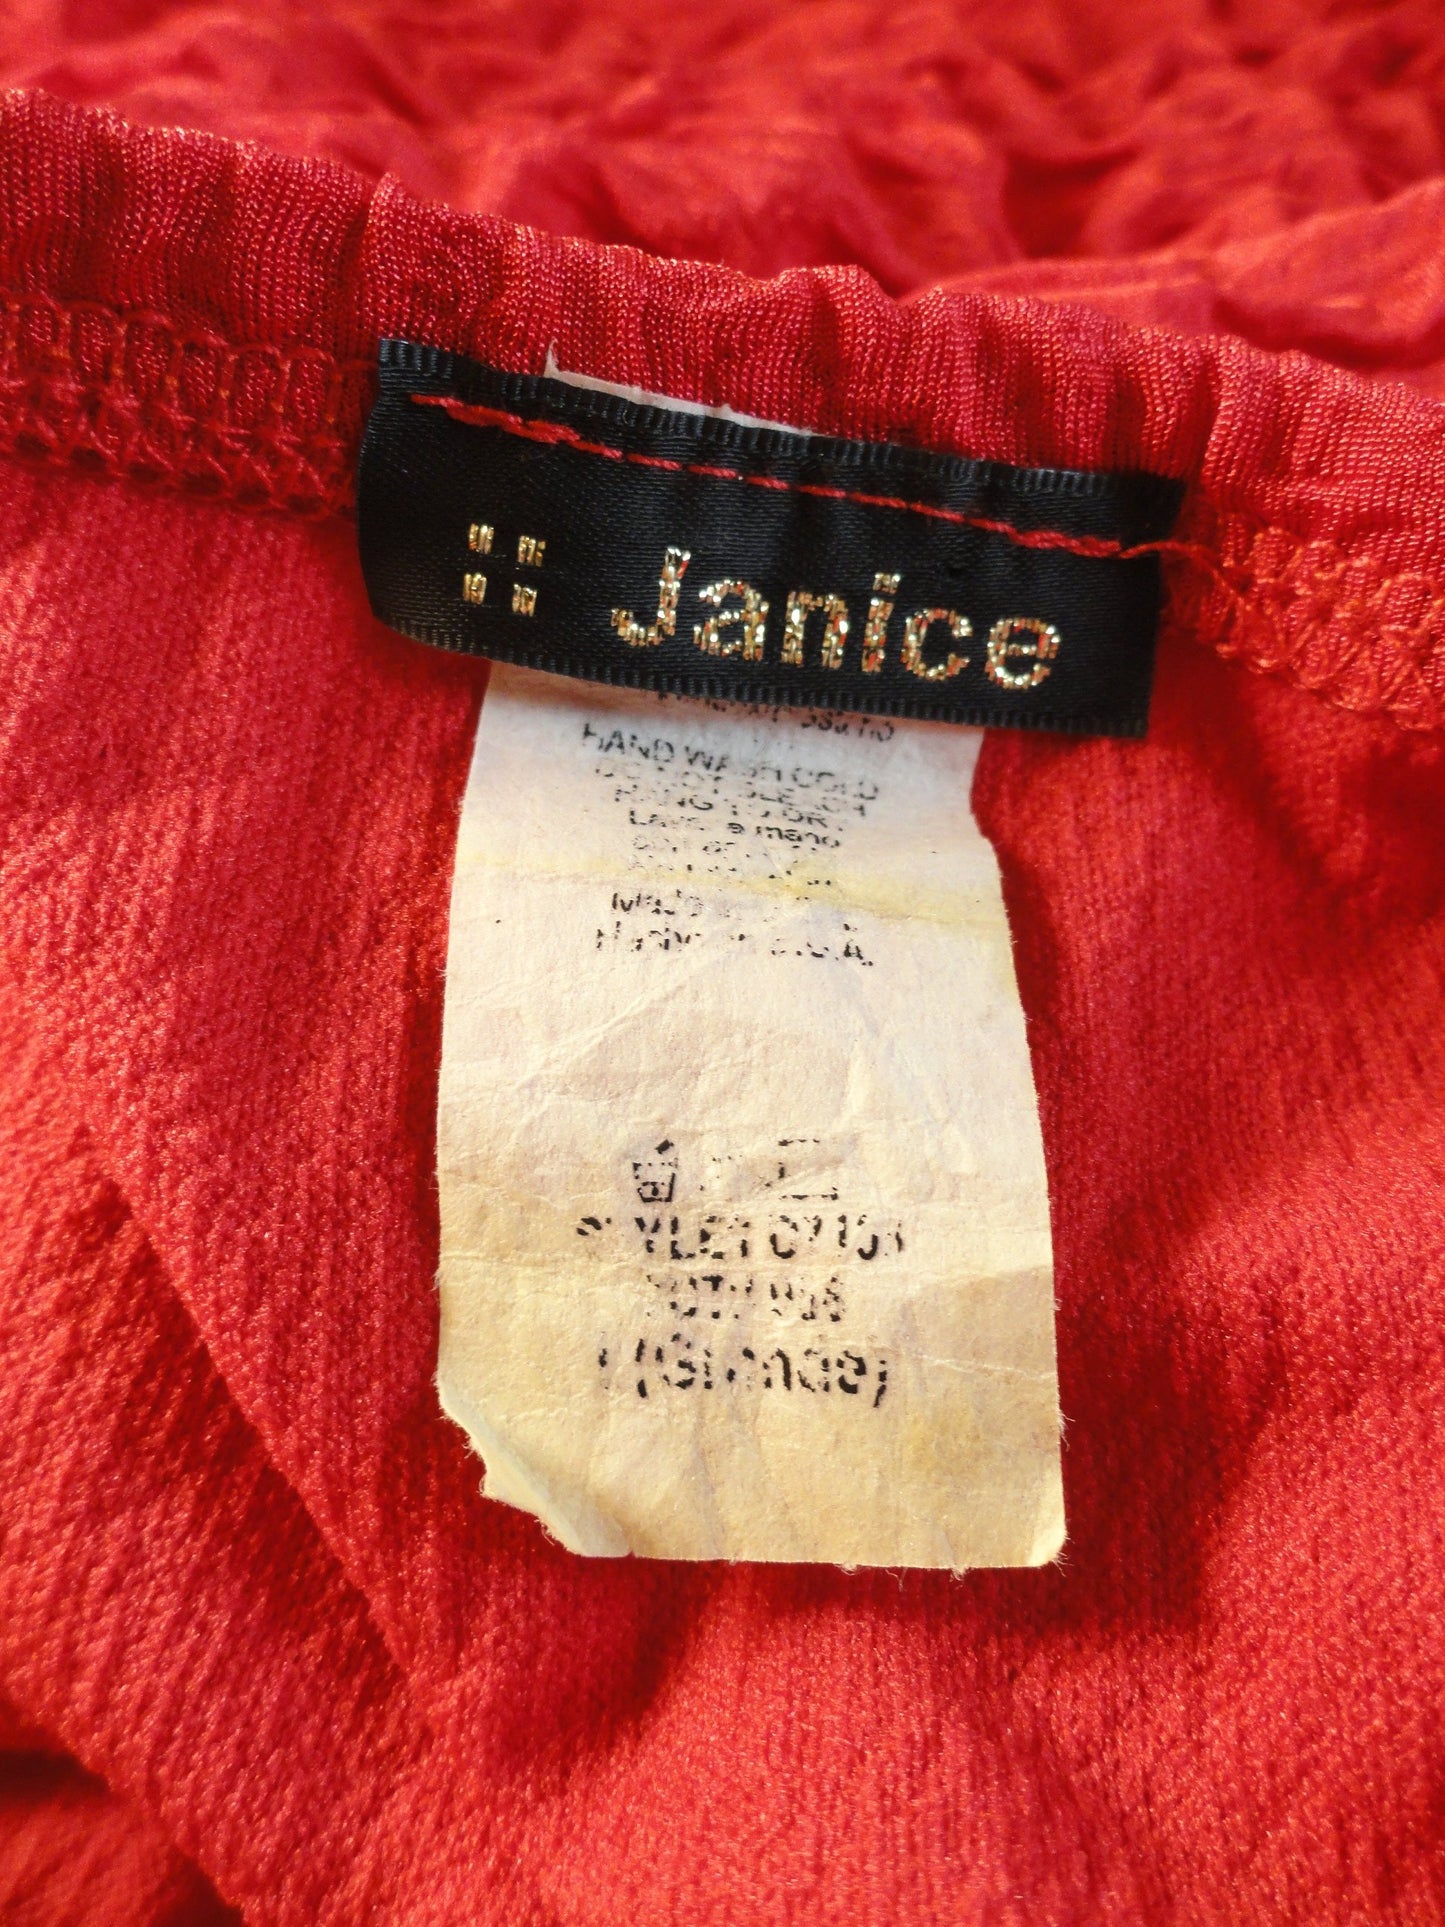 Janice Red Salsa Dress Size M/L SKU 000087